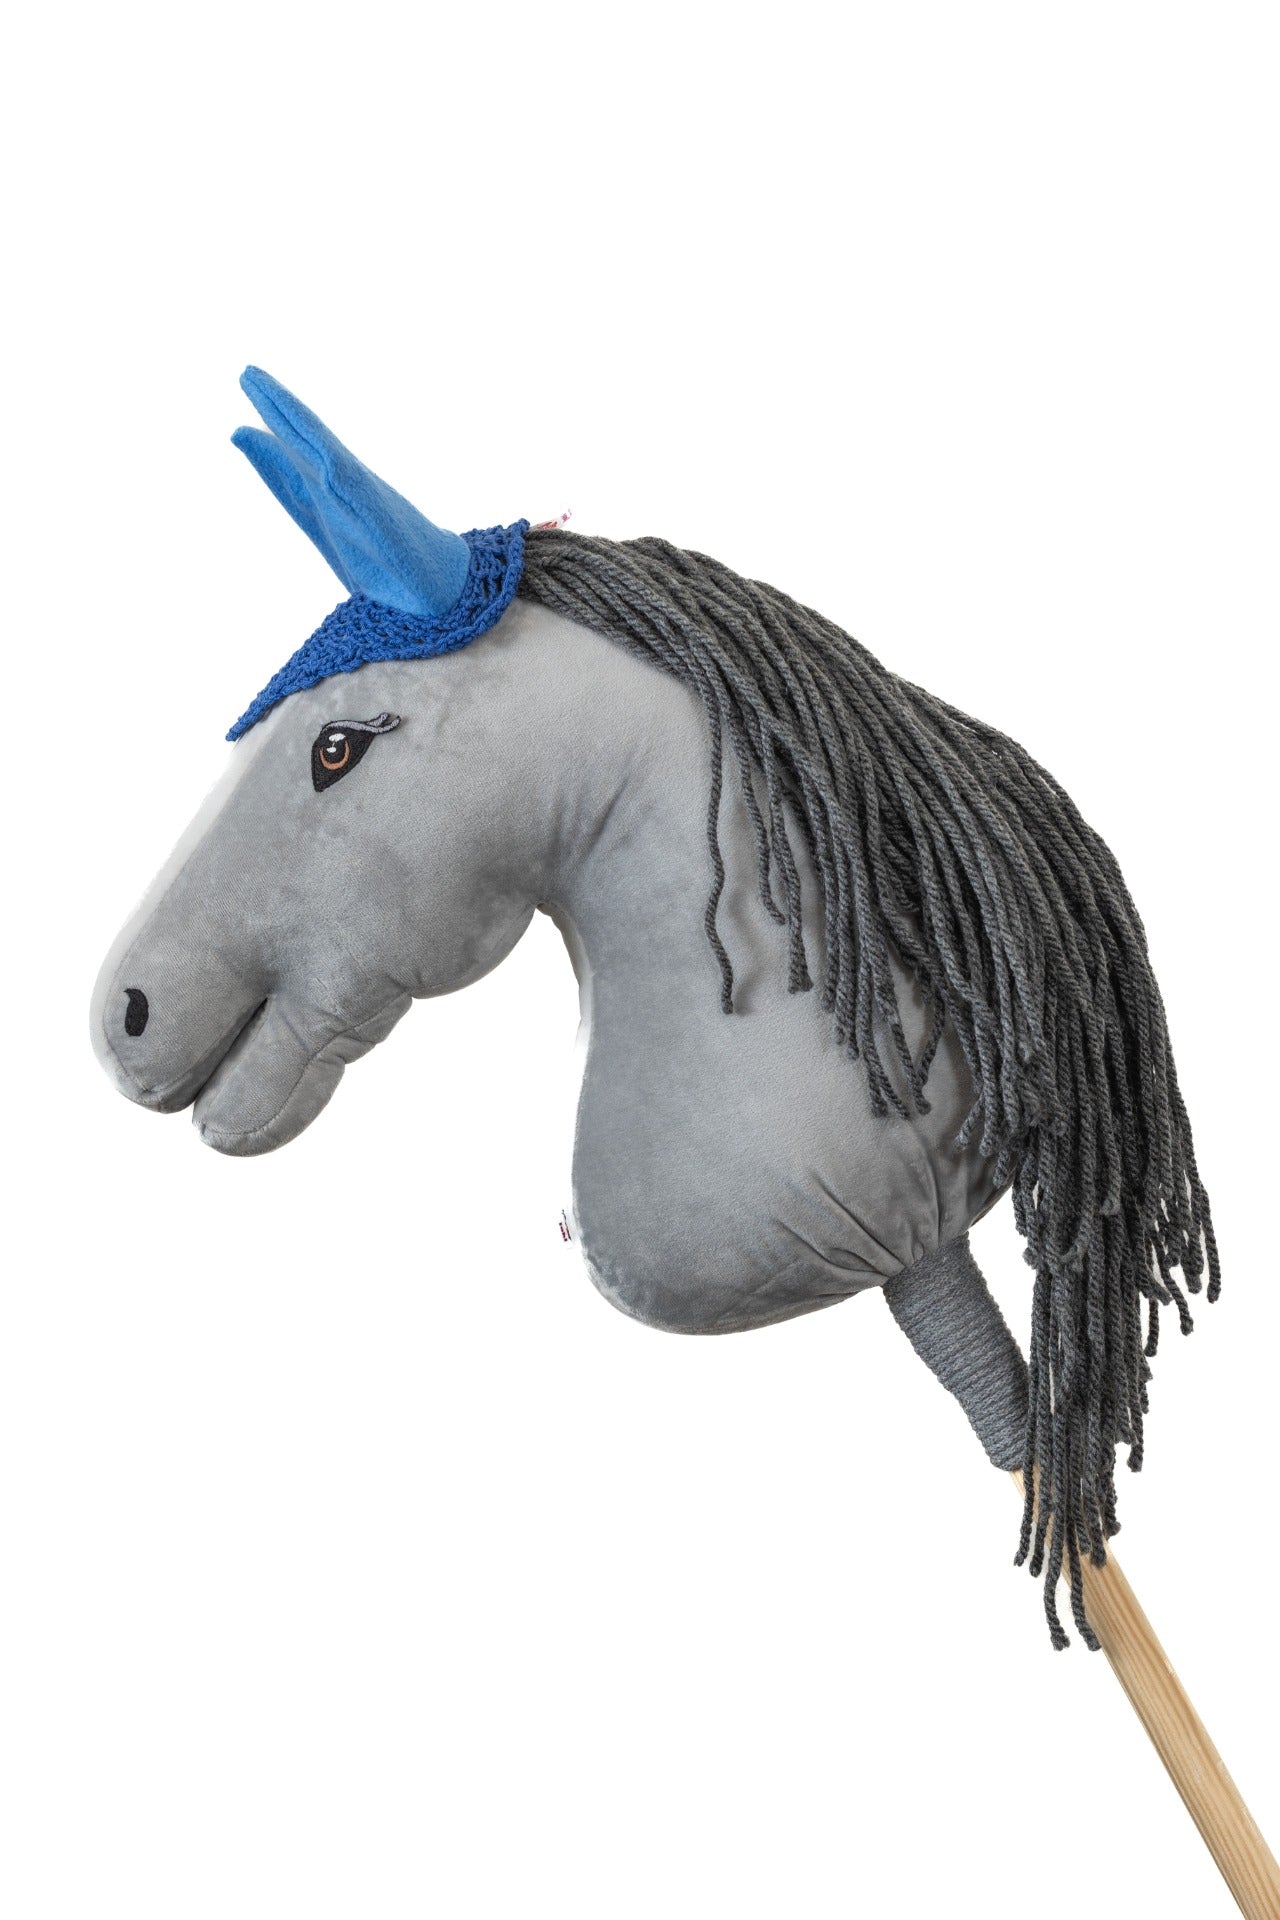 Čabraka háčkovaná - Tmavě modrá s modrýma ušima - Dospělý kůň